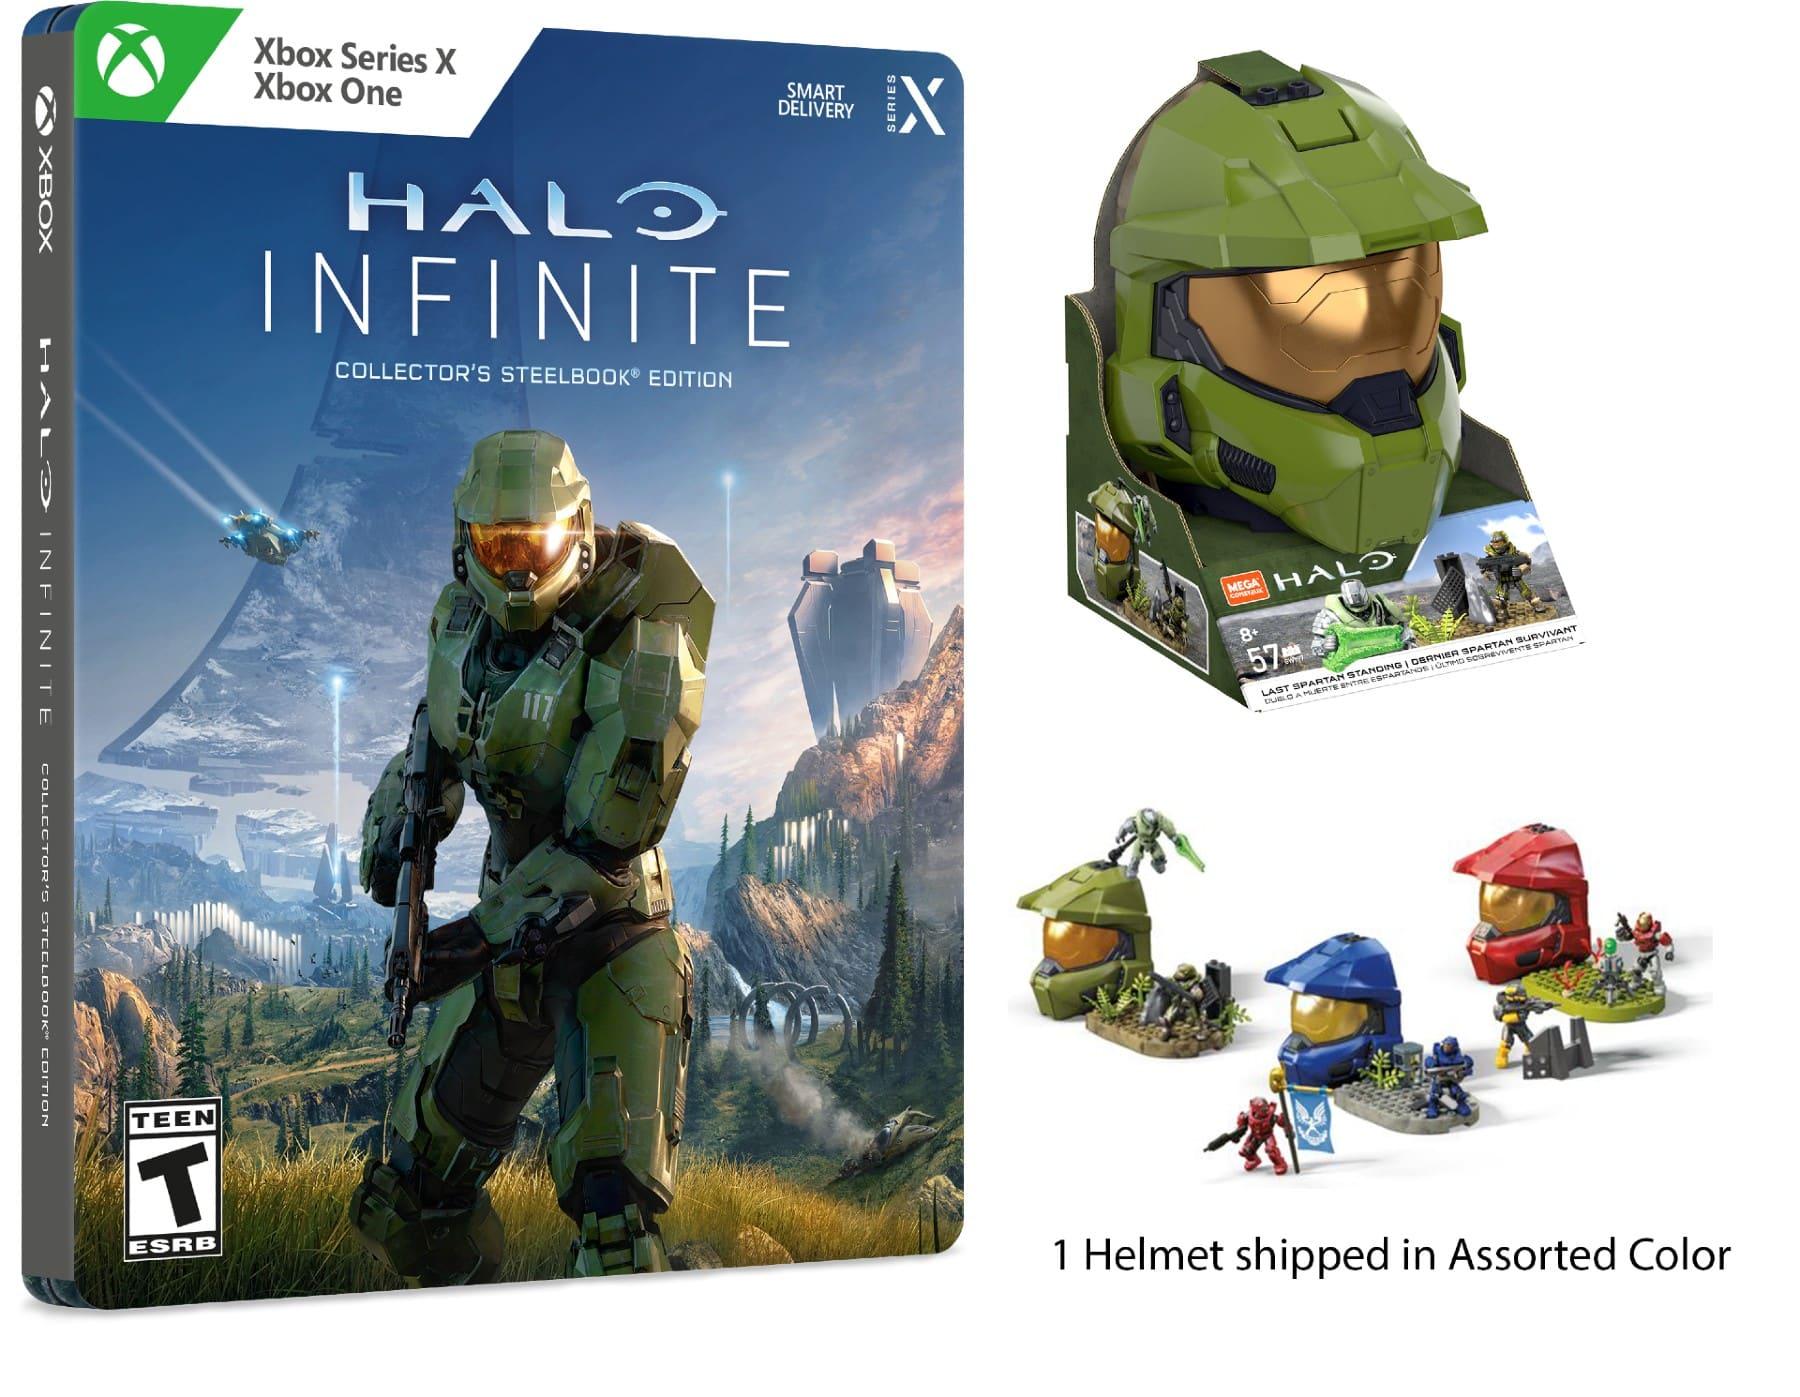 Halo Infinite Walmart pre-order bonus including a helmet and steelbook 